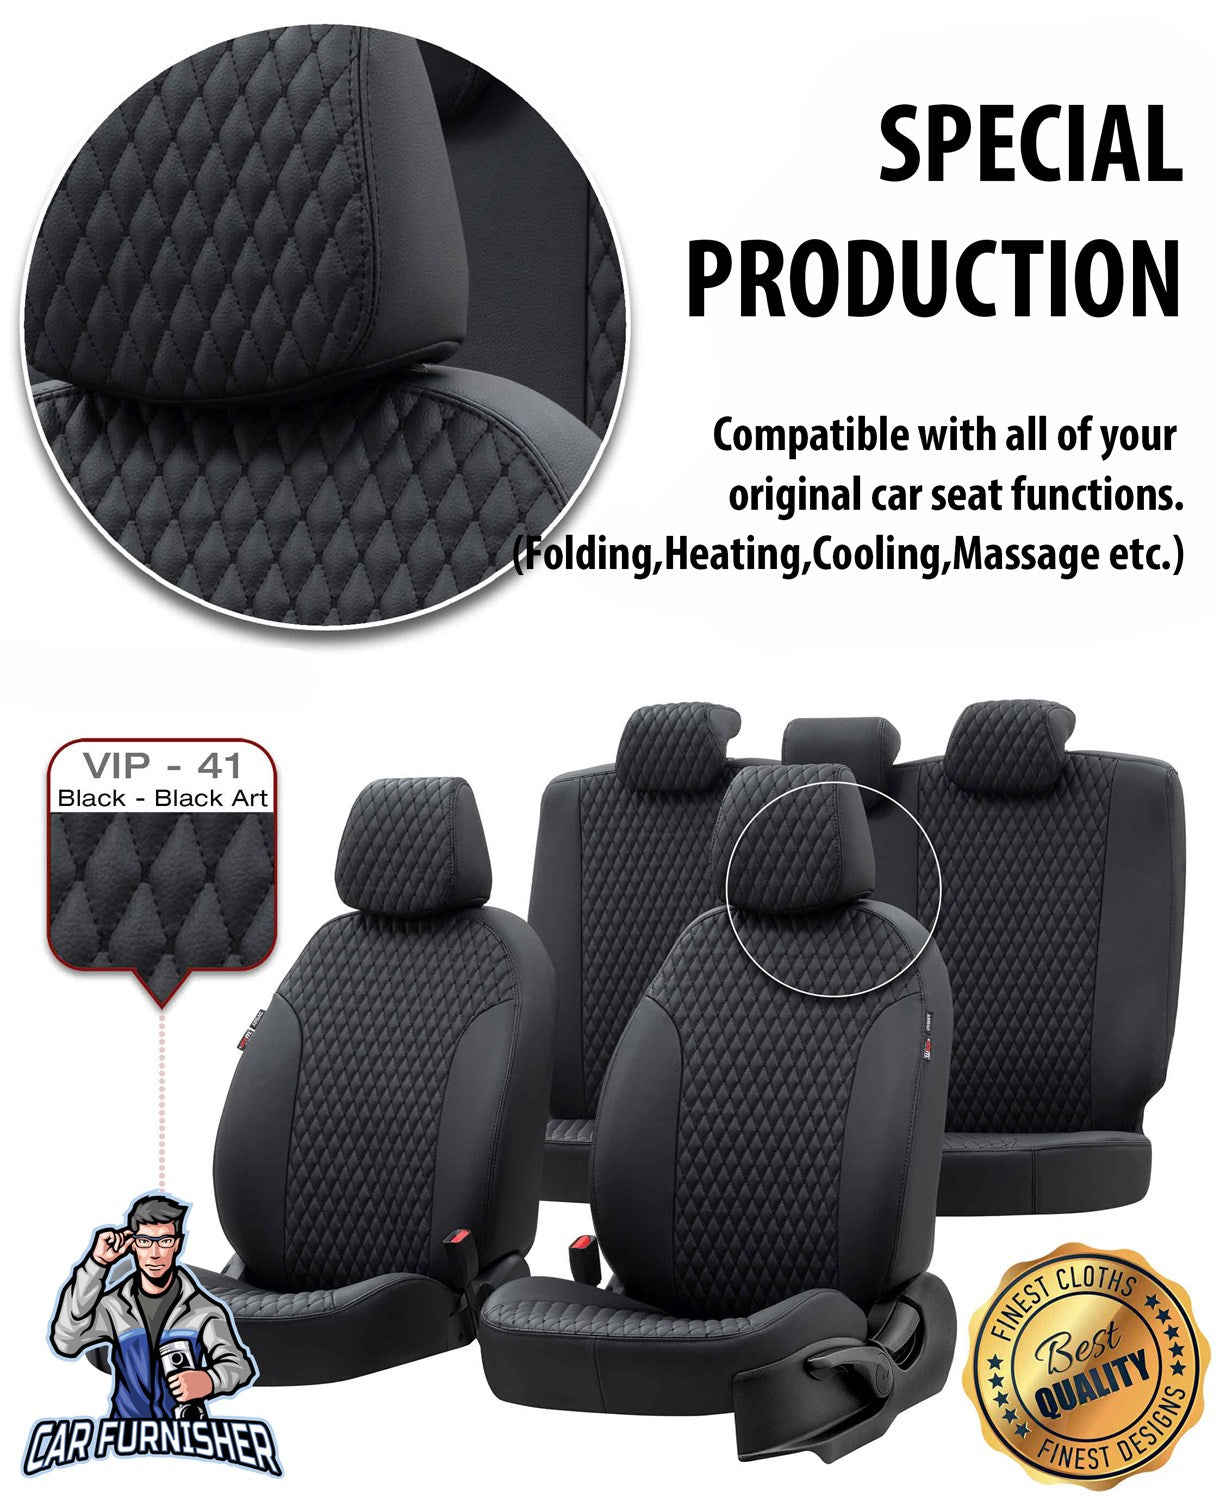 Isuzu N-Wide Seat Covers Amsterdam Leather Design Black Leather